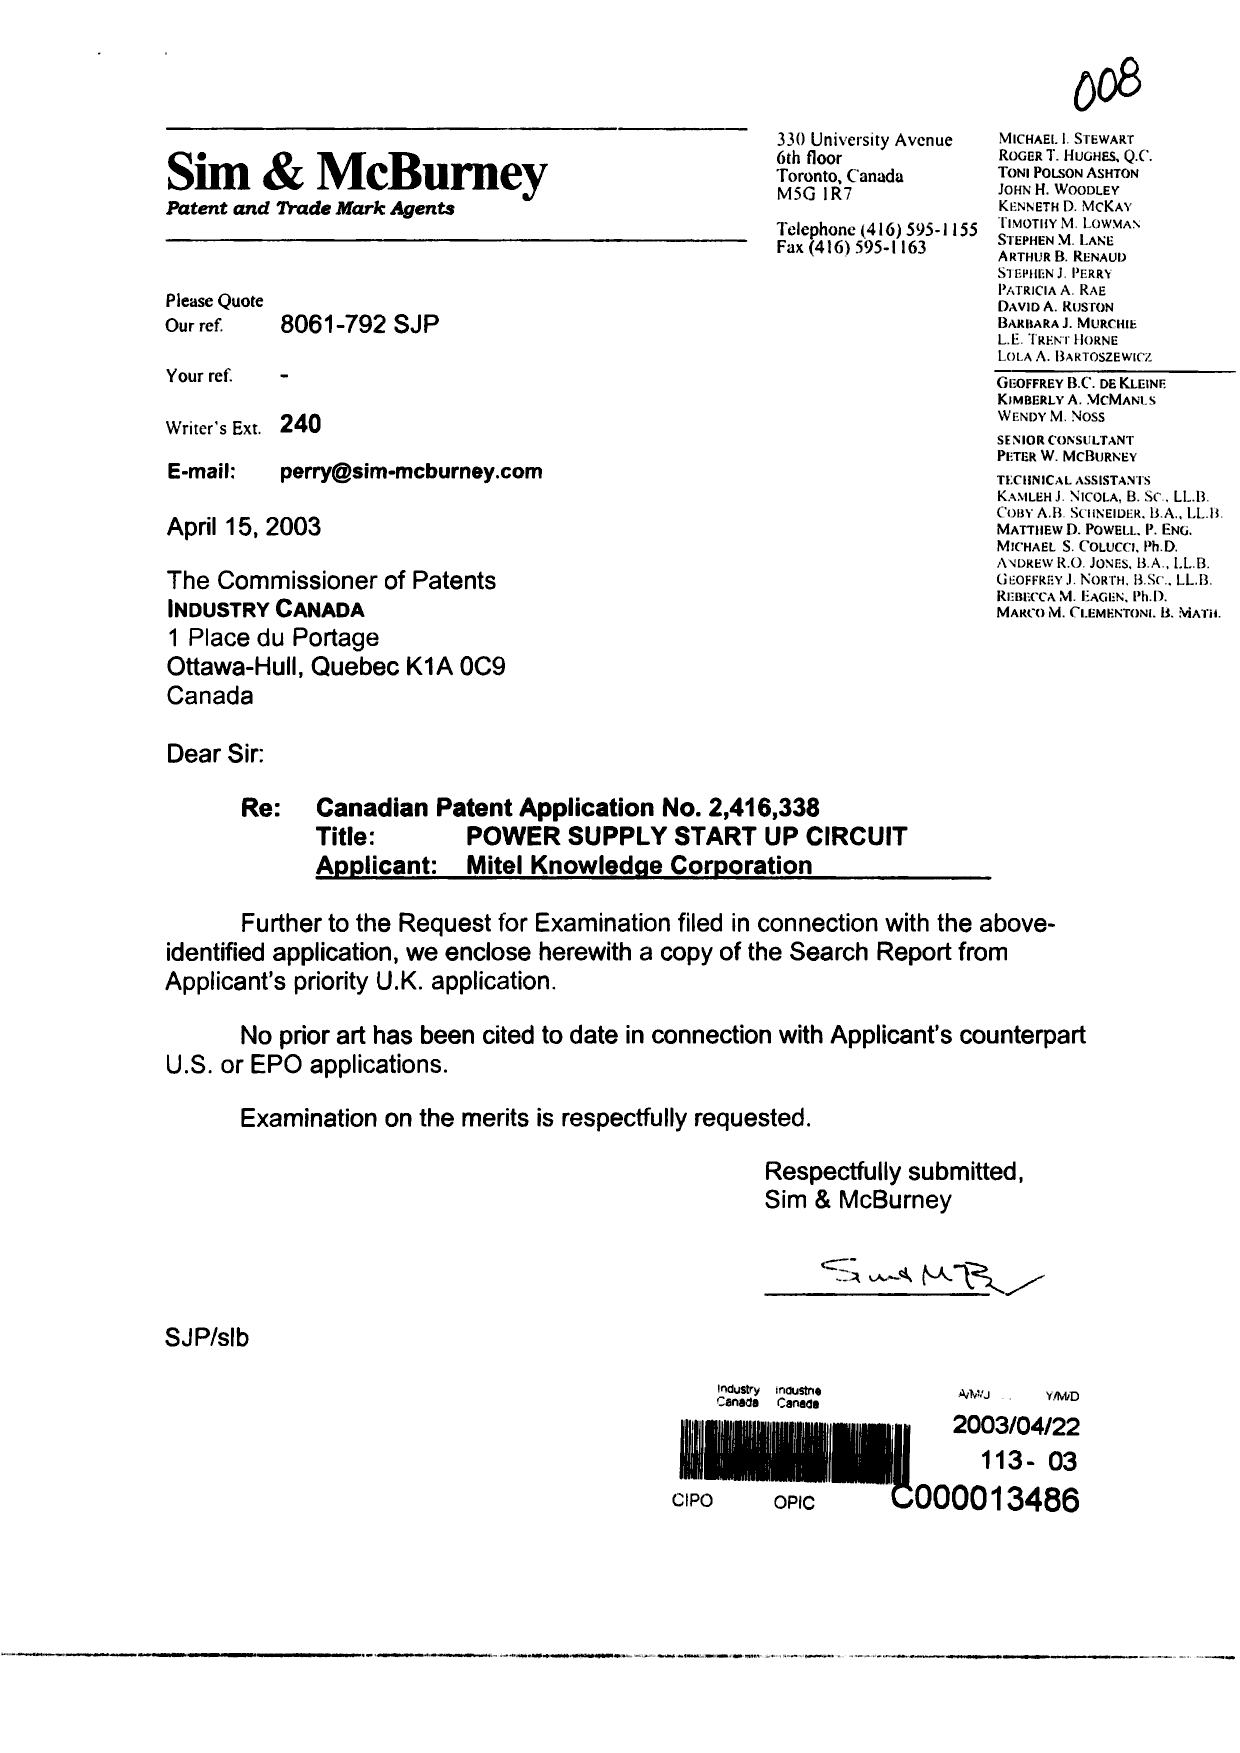 Canadian Patent Document 2416338. Prosecution-Amendment 20030422. Image 1 of 1